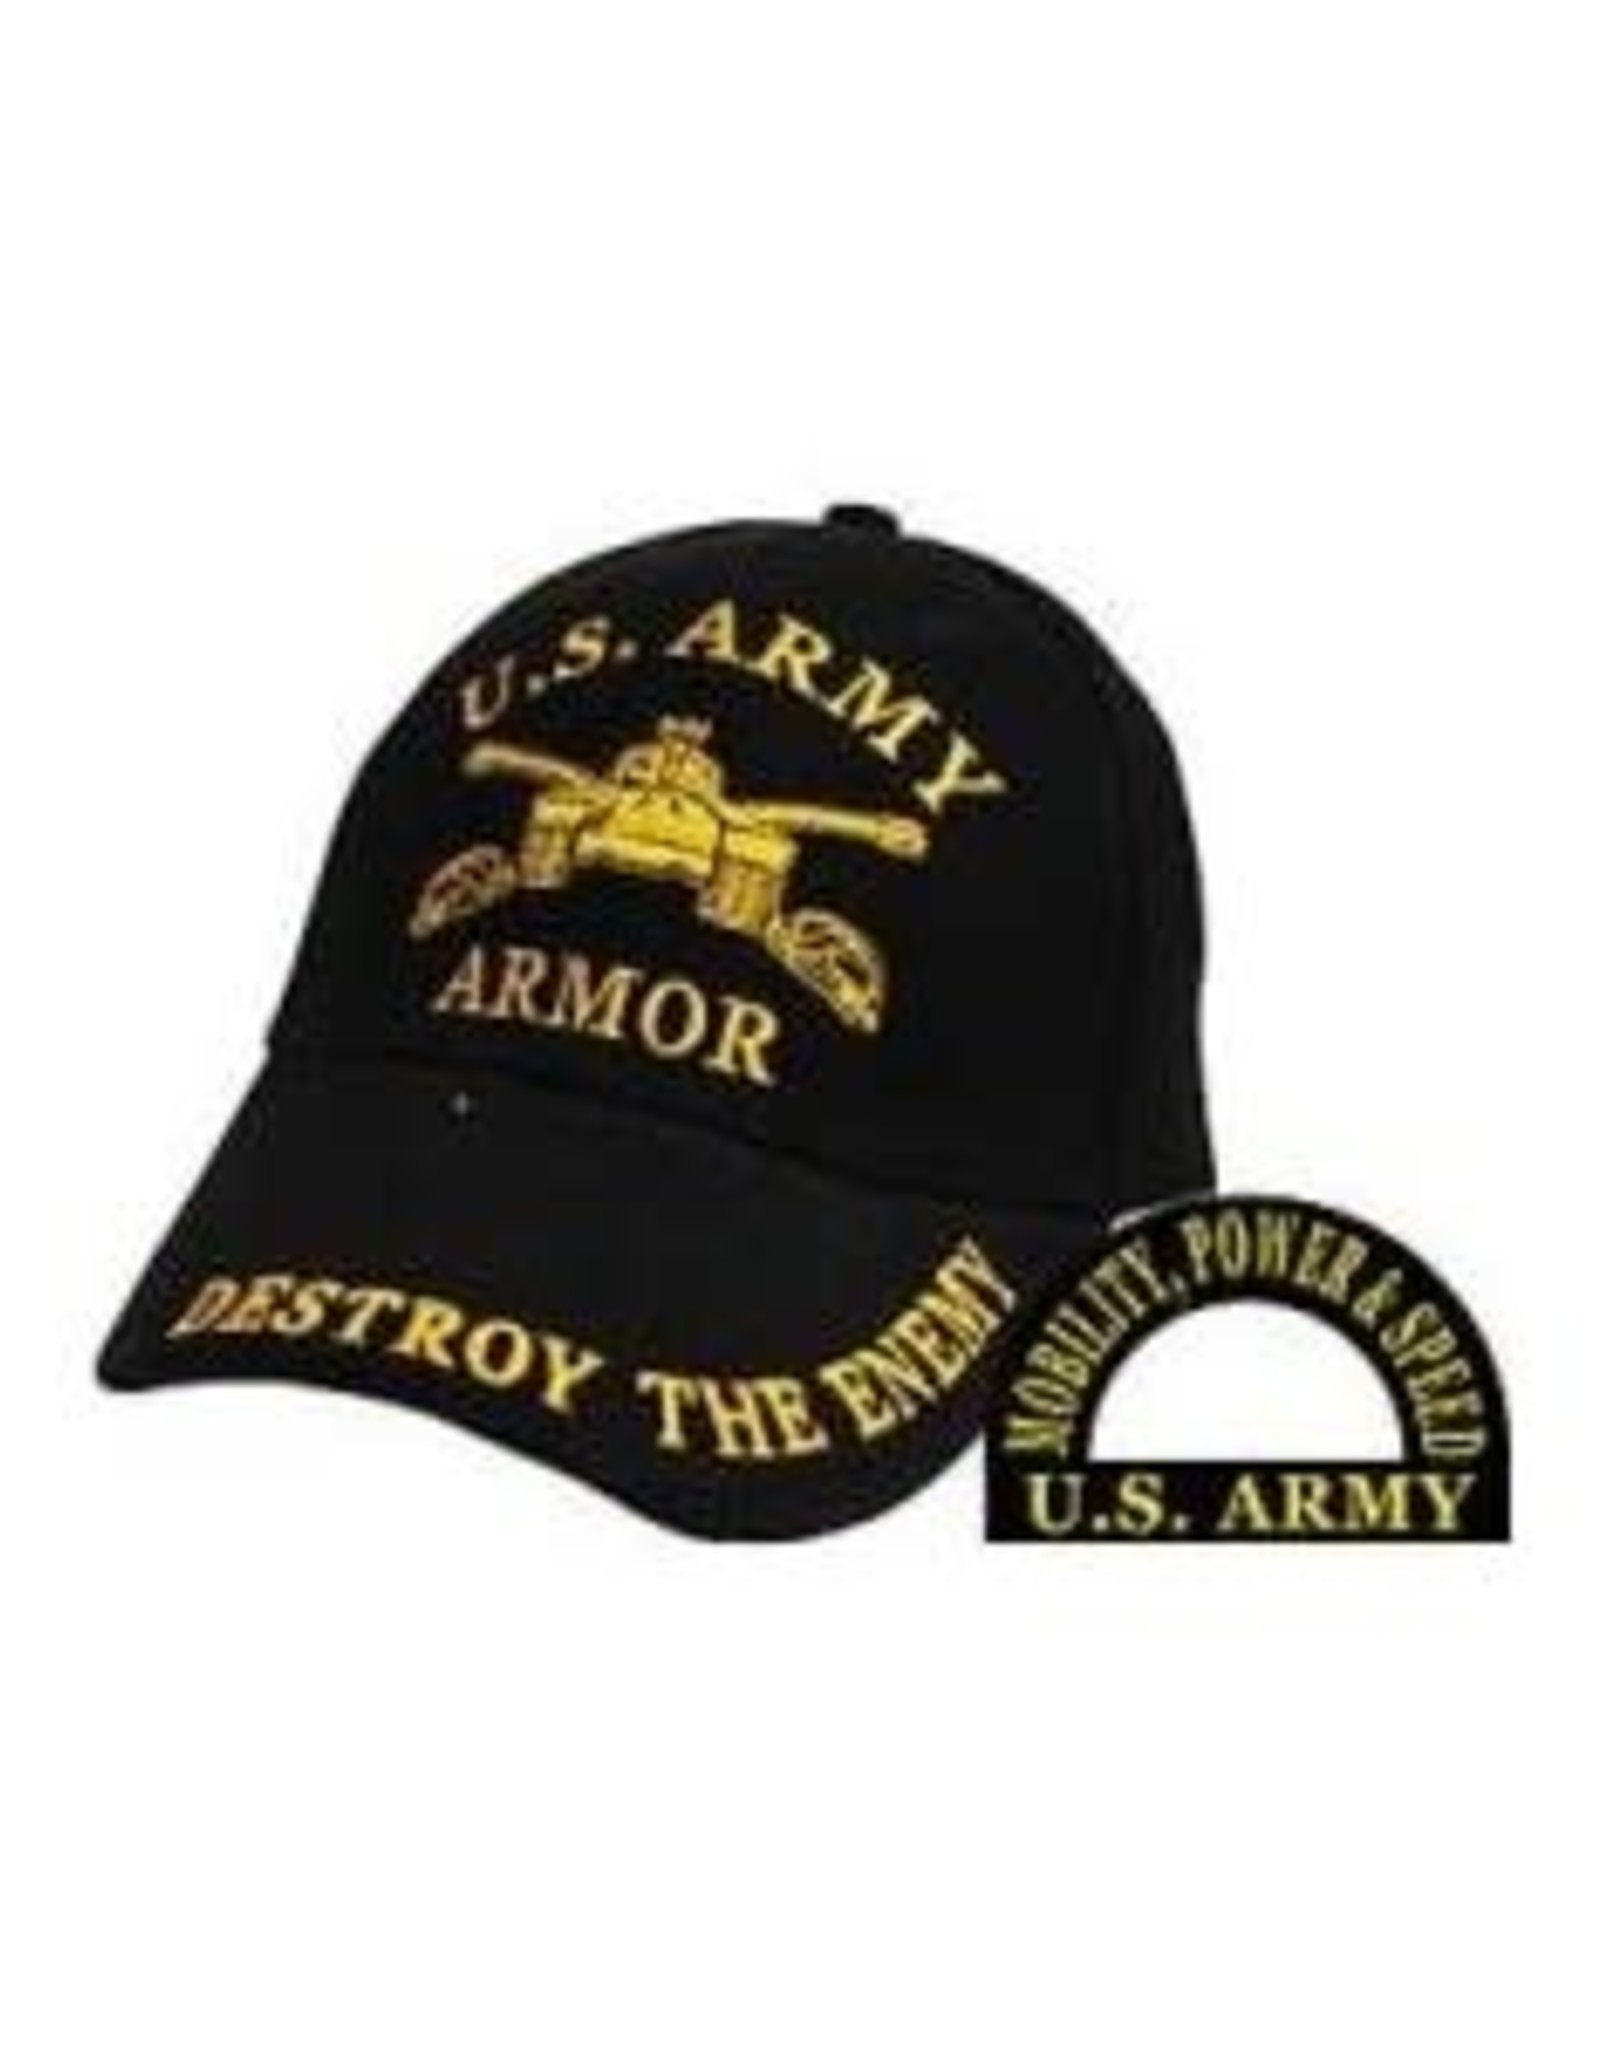 armor hat